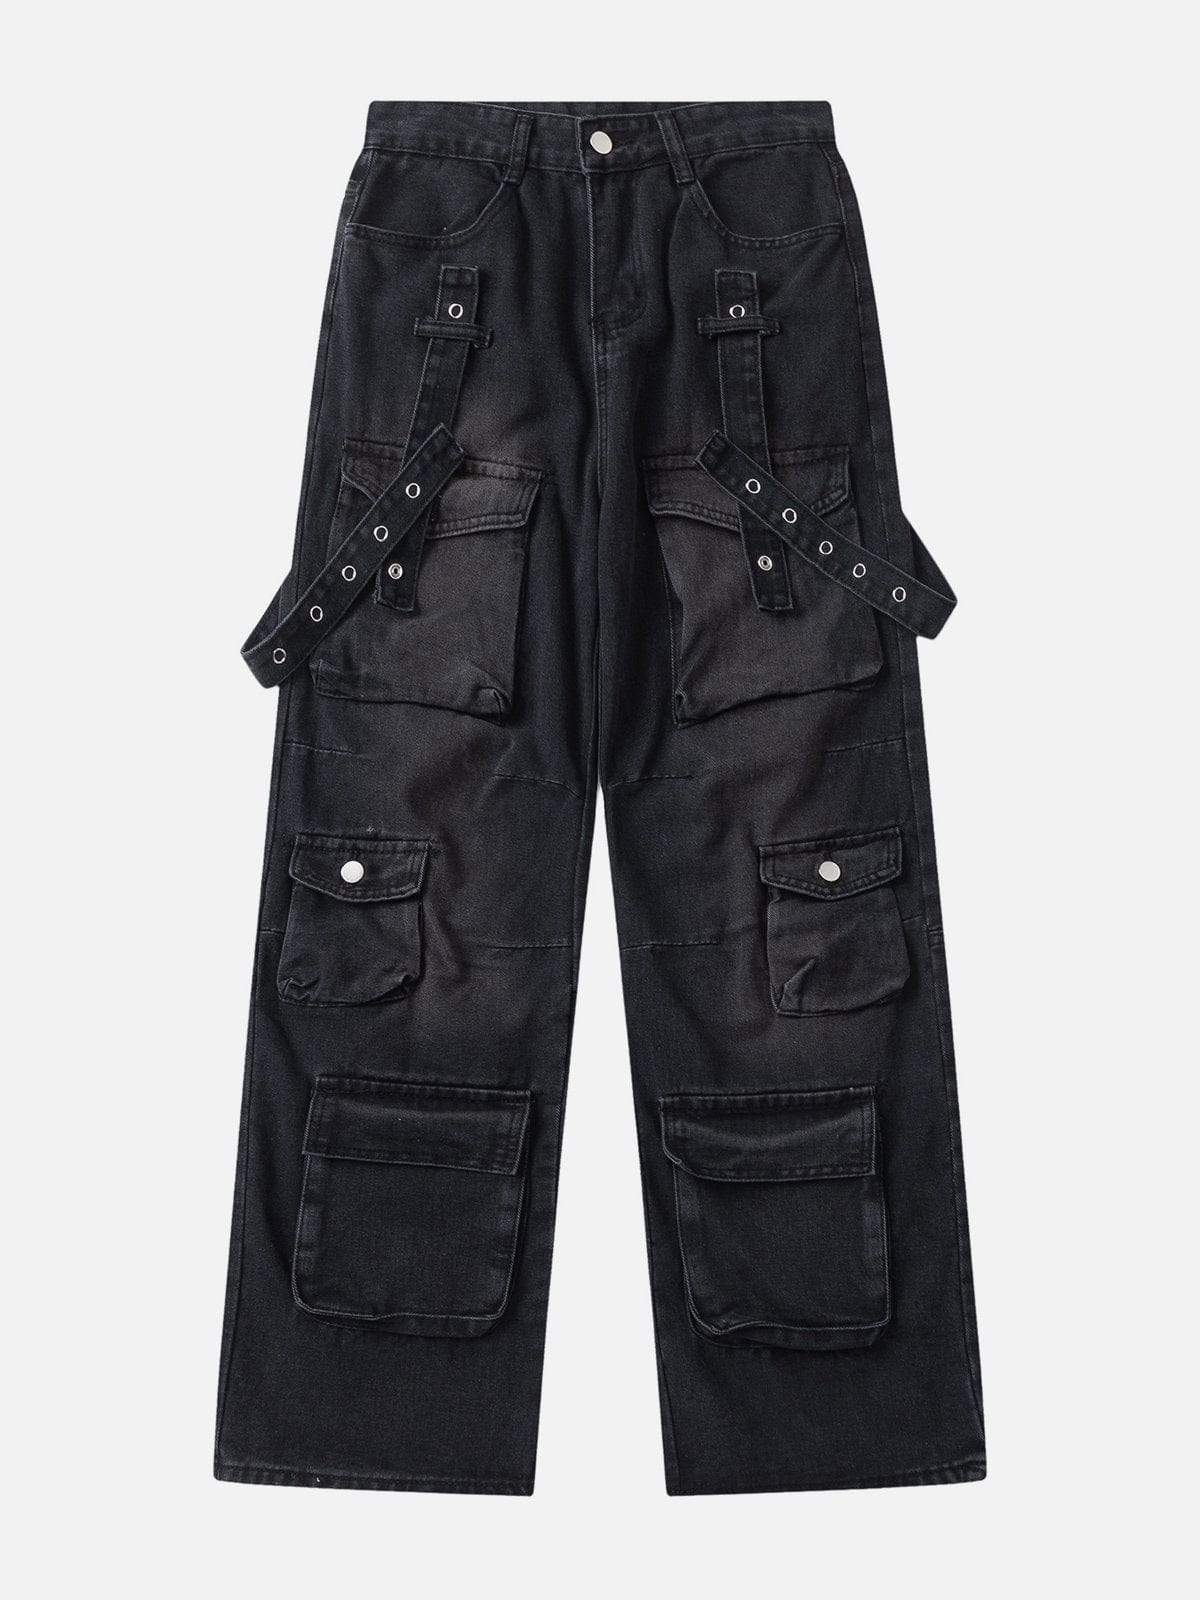 NEV Multi-Pocket Workwear Jeans